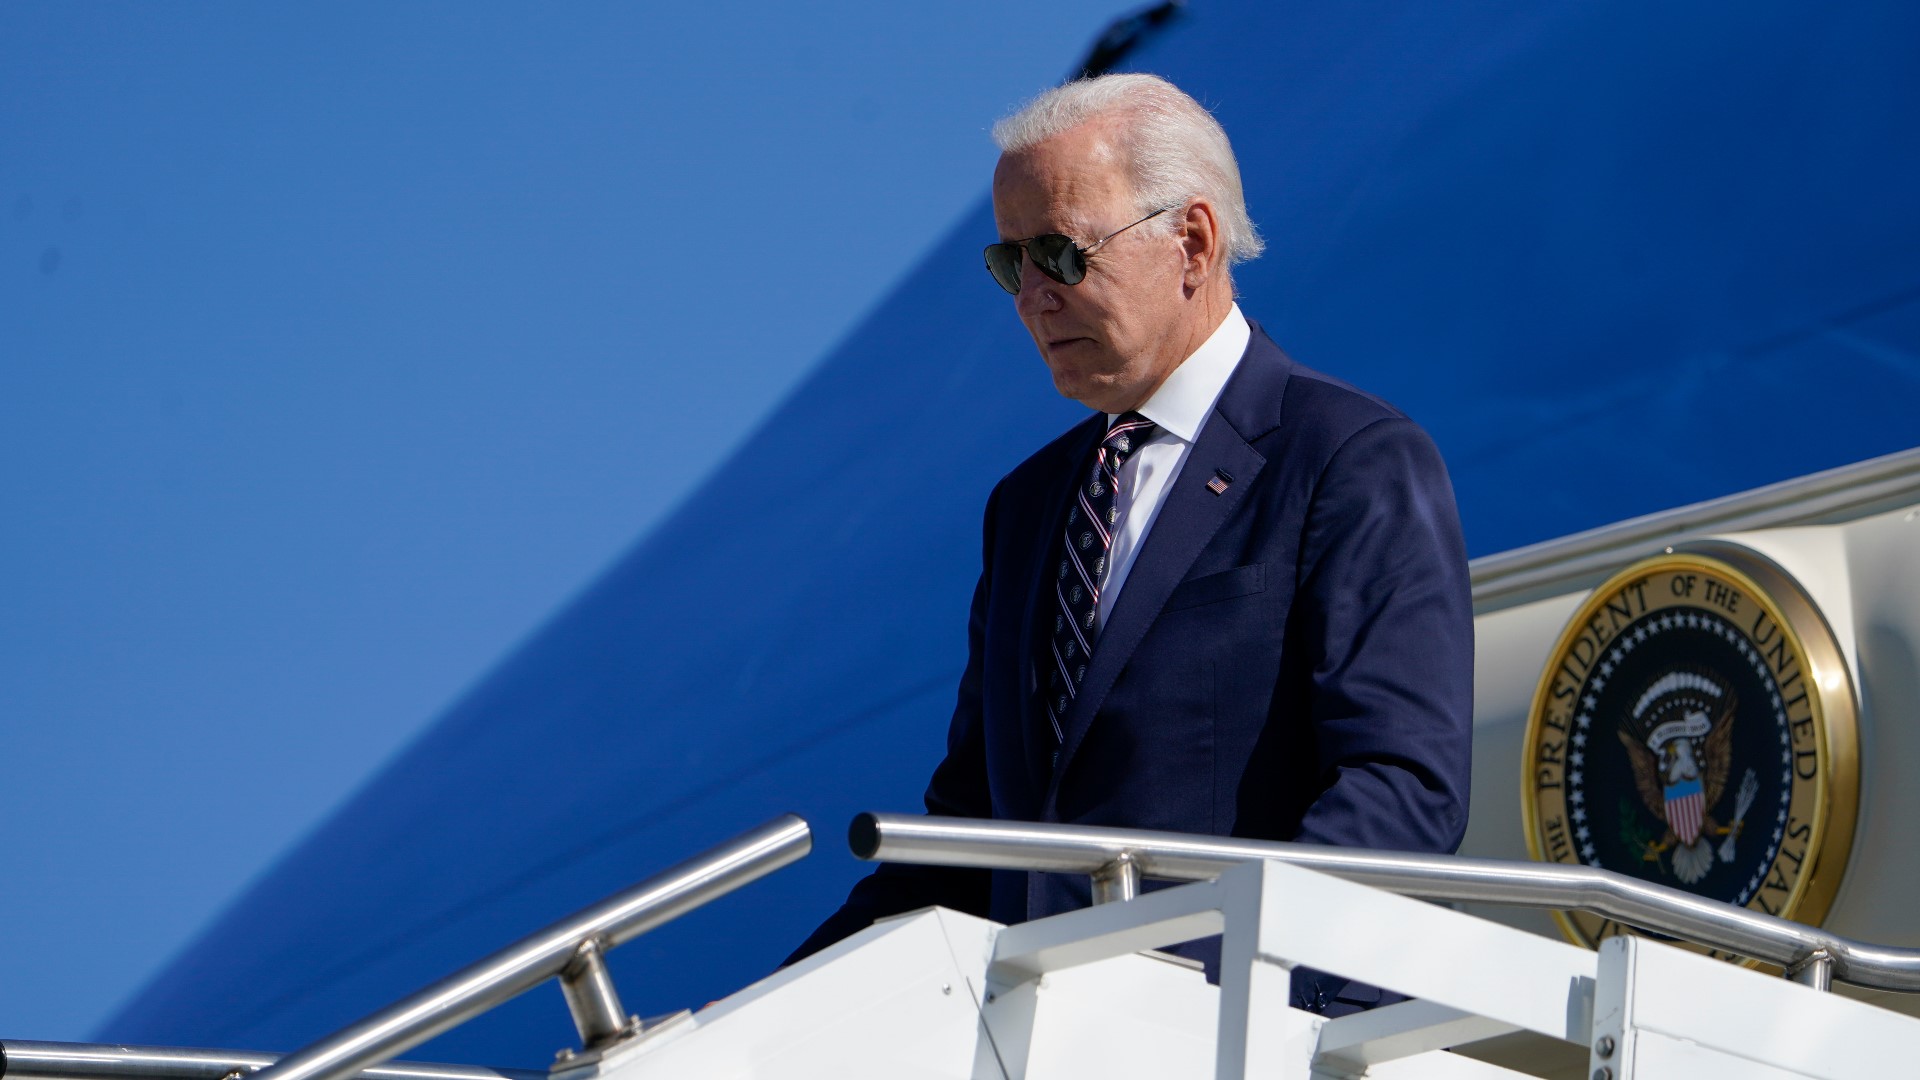 President Joe Biden arrives on Air Force One for Intel's groundbreaking ceremony